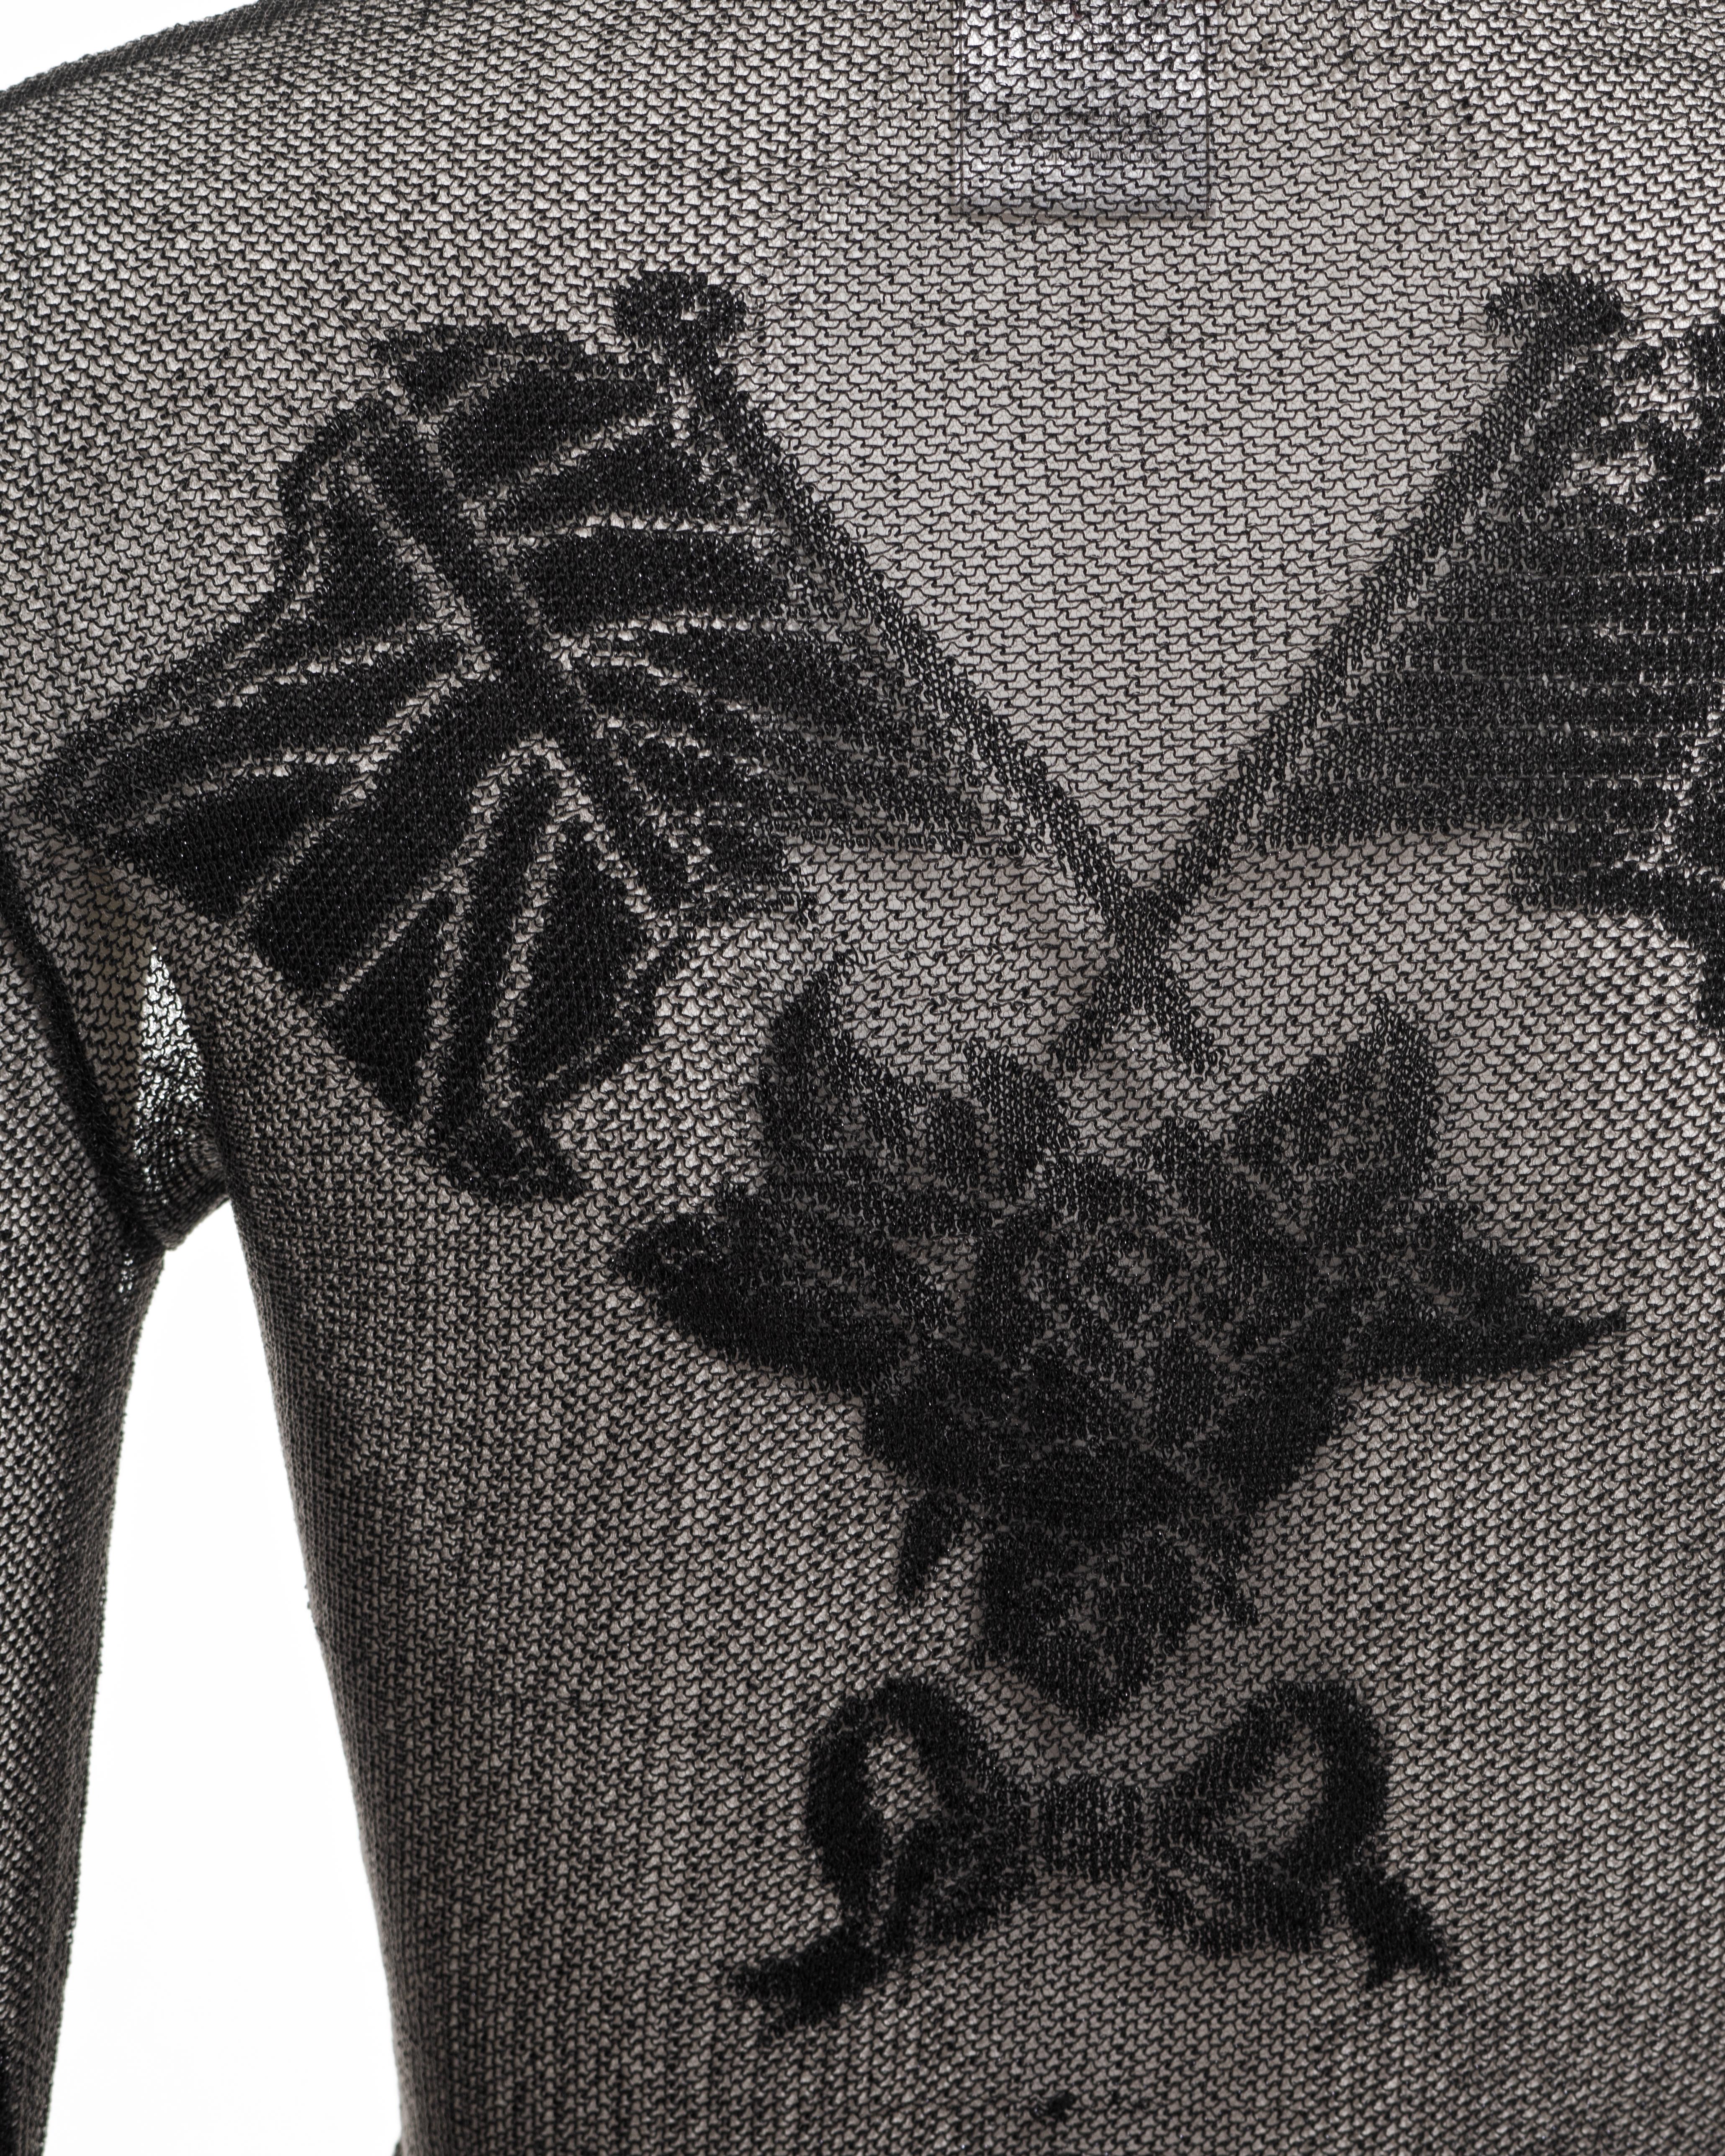 John Galliano black mesh top with tattoo motifs, fw 1997 10